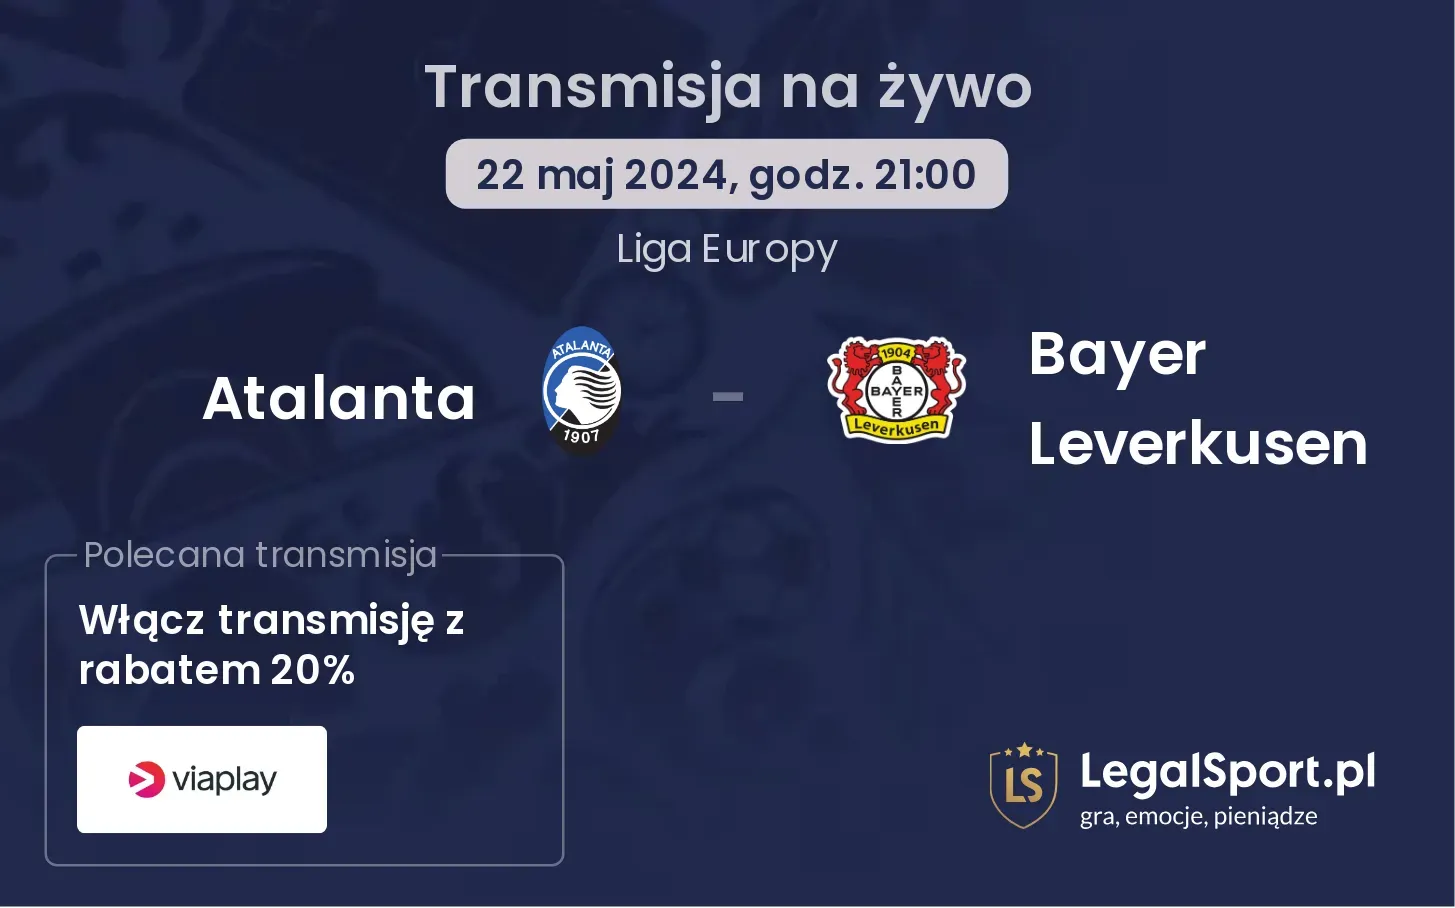 Atalanta - Bayer Leverkusen transmisja na żywo